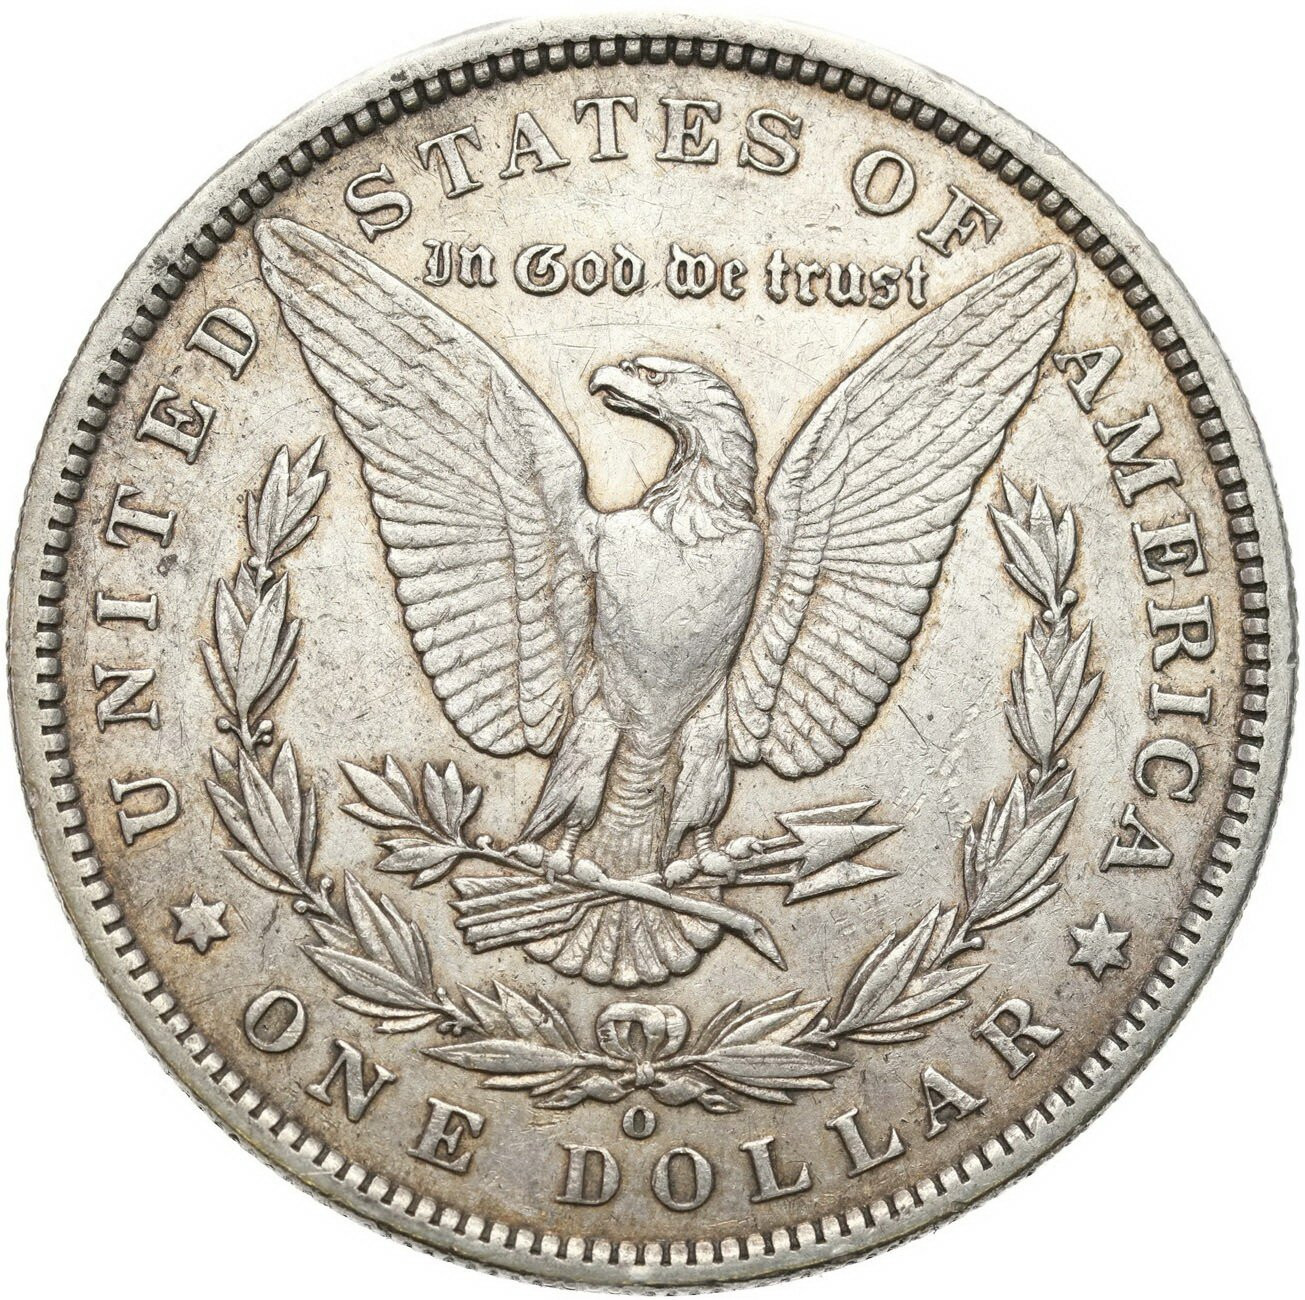 USA 1 dolar 1889 O, New Orleans 